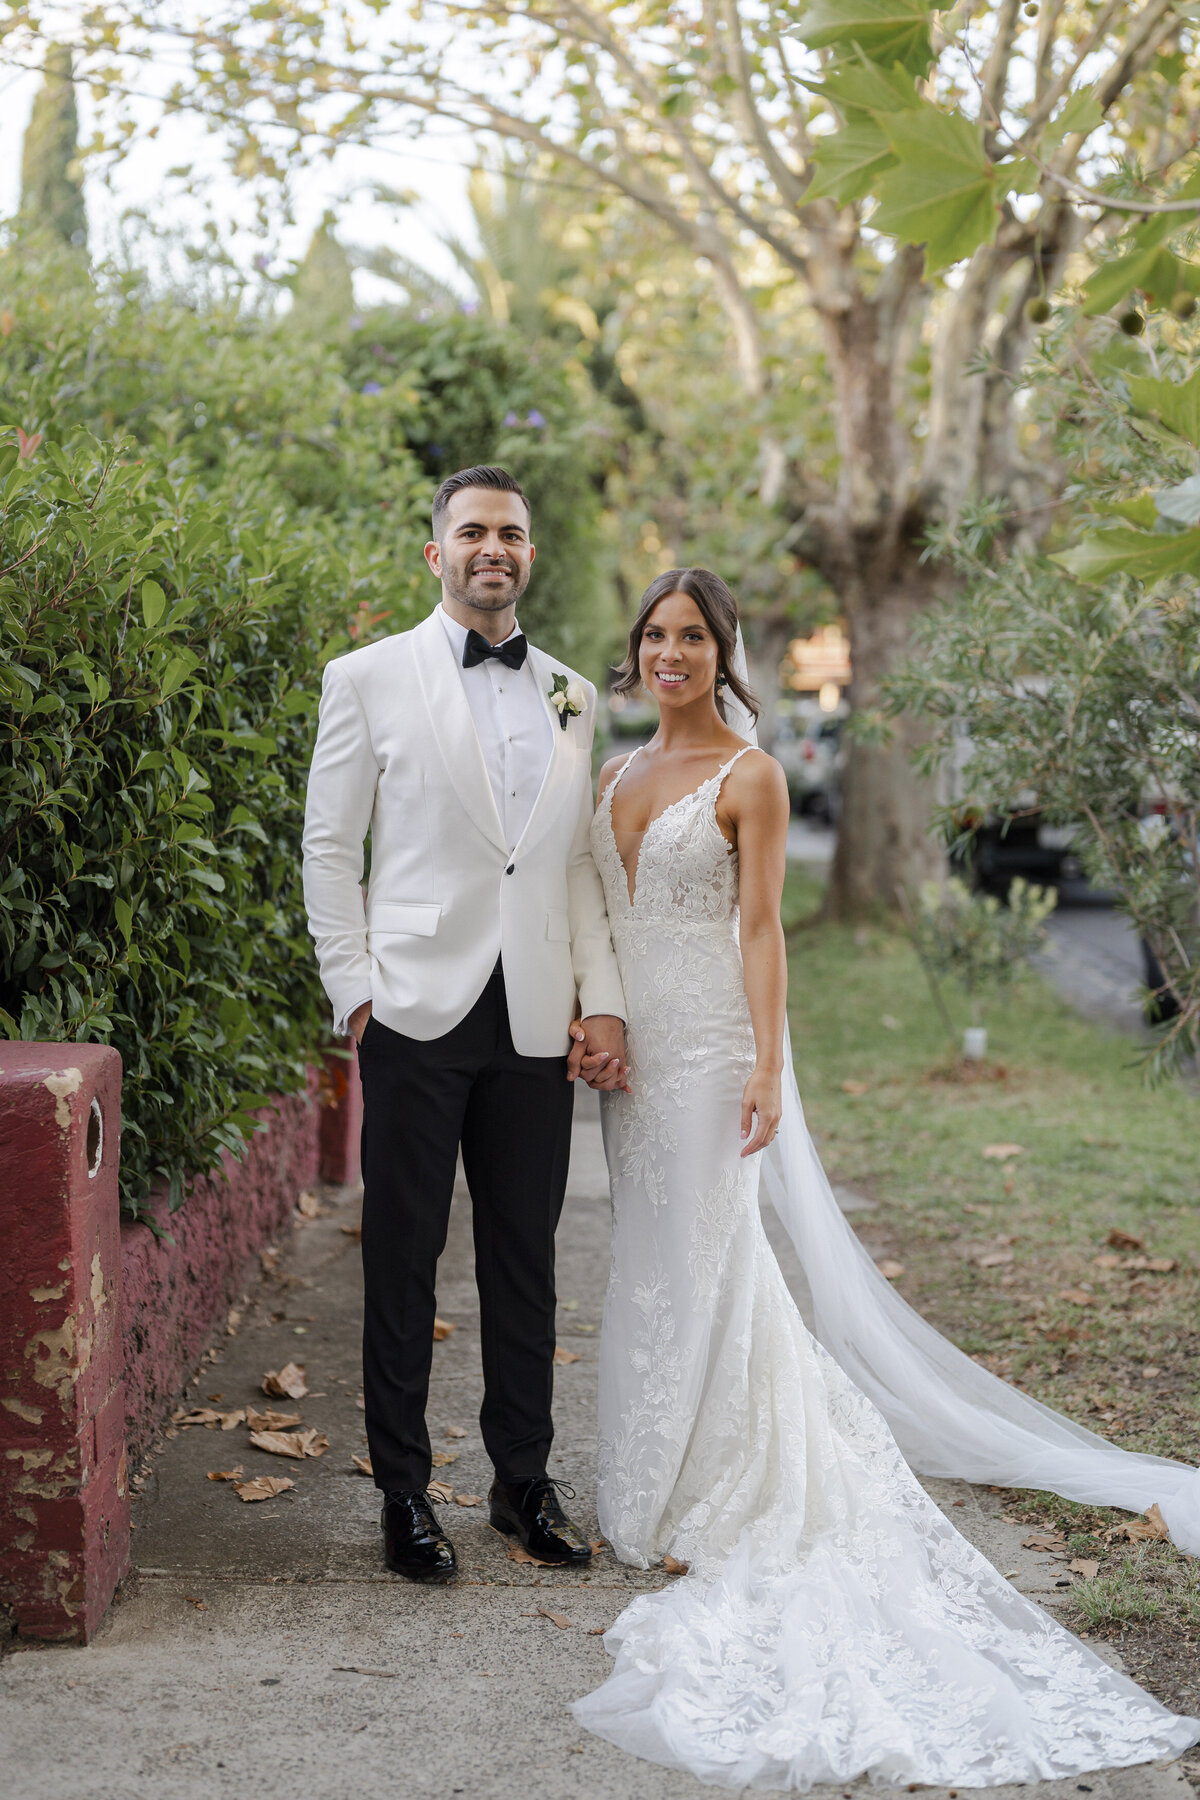 Karina & Daniel Quat Quatta Melbourne Wedding Photography_169